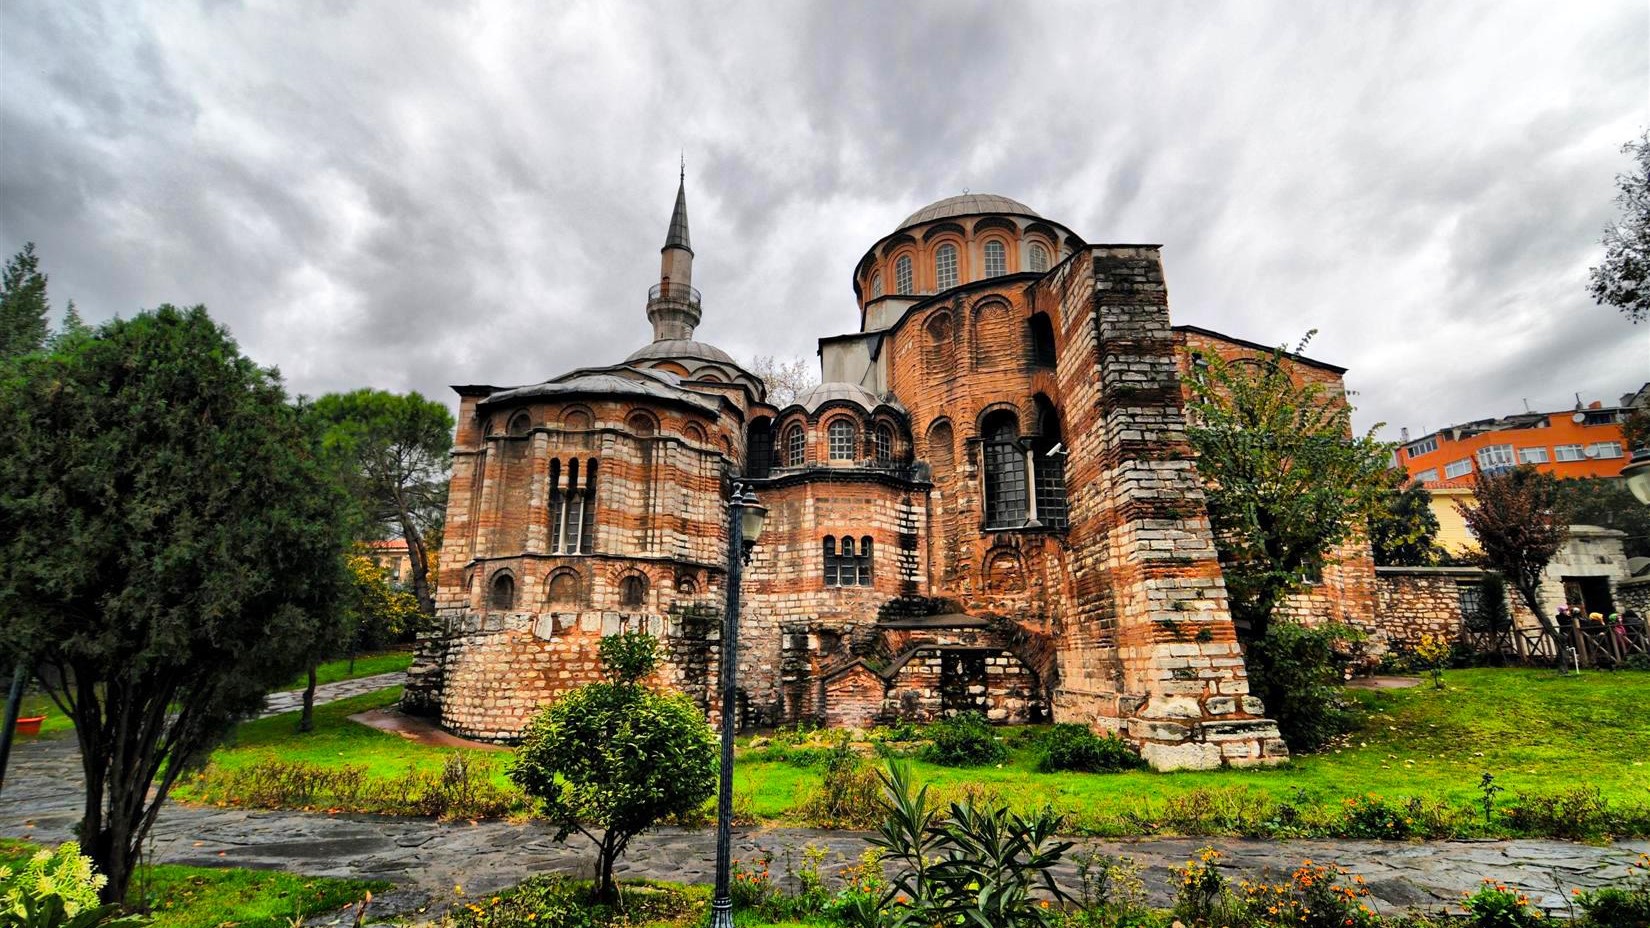 The Chora Church: Istanbul's Byzantine Treasure Trove